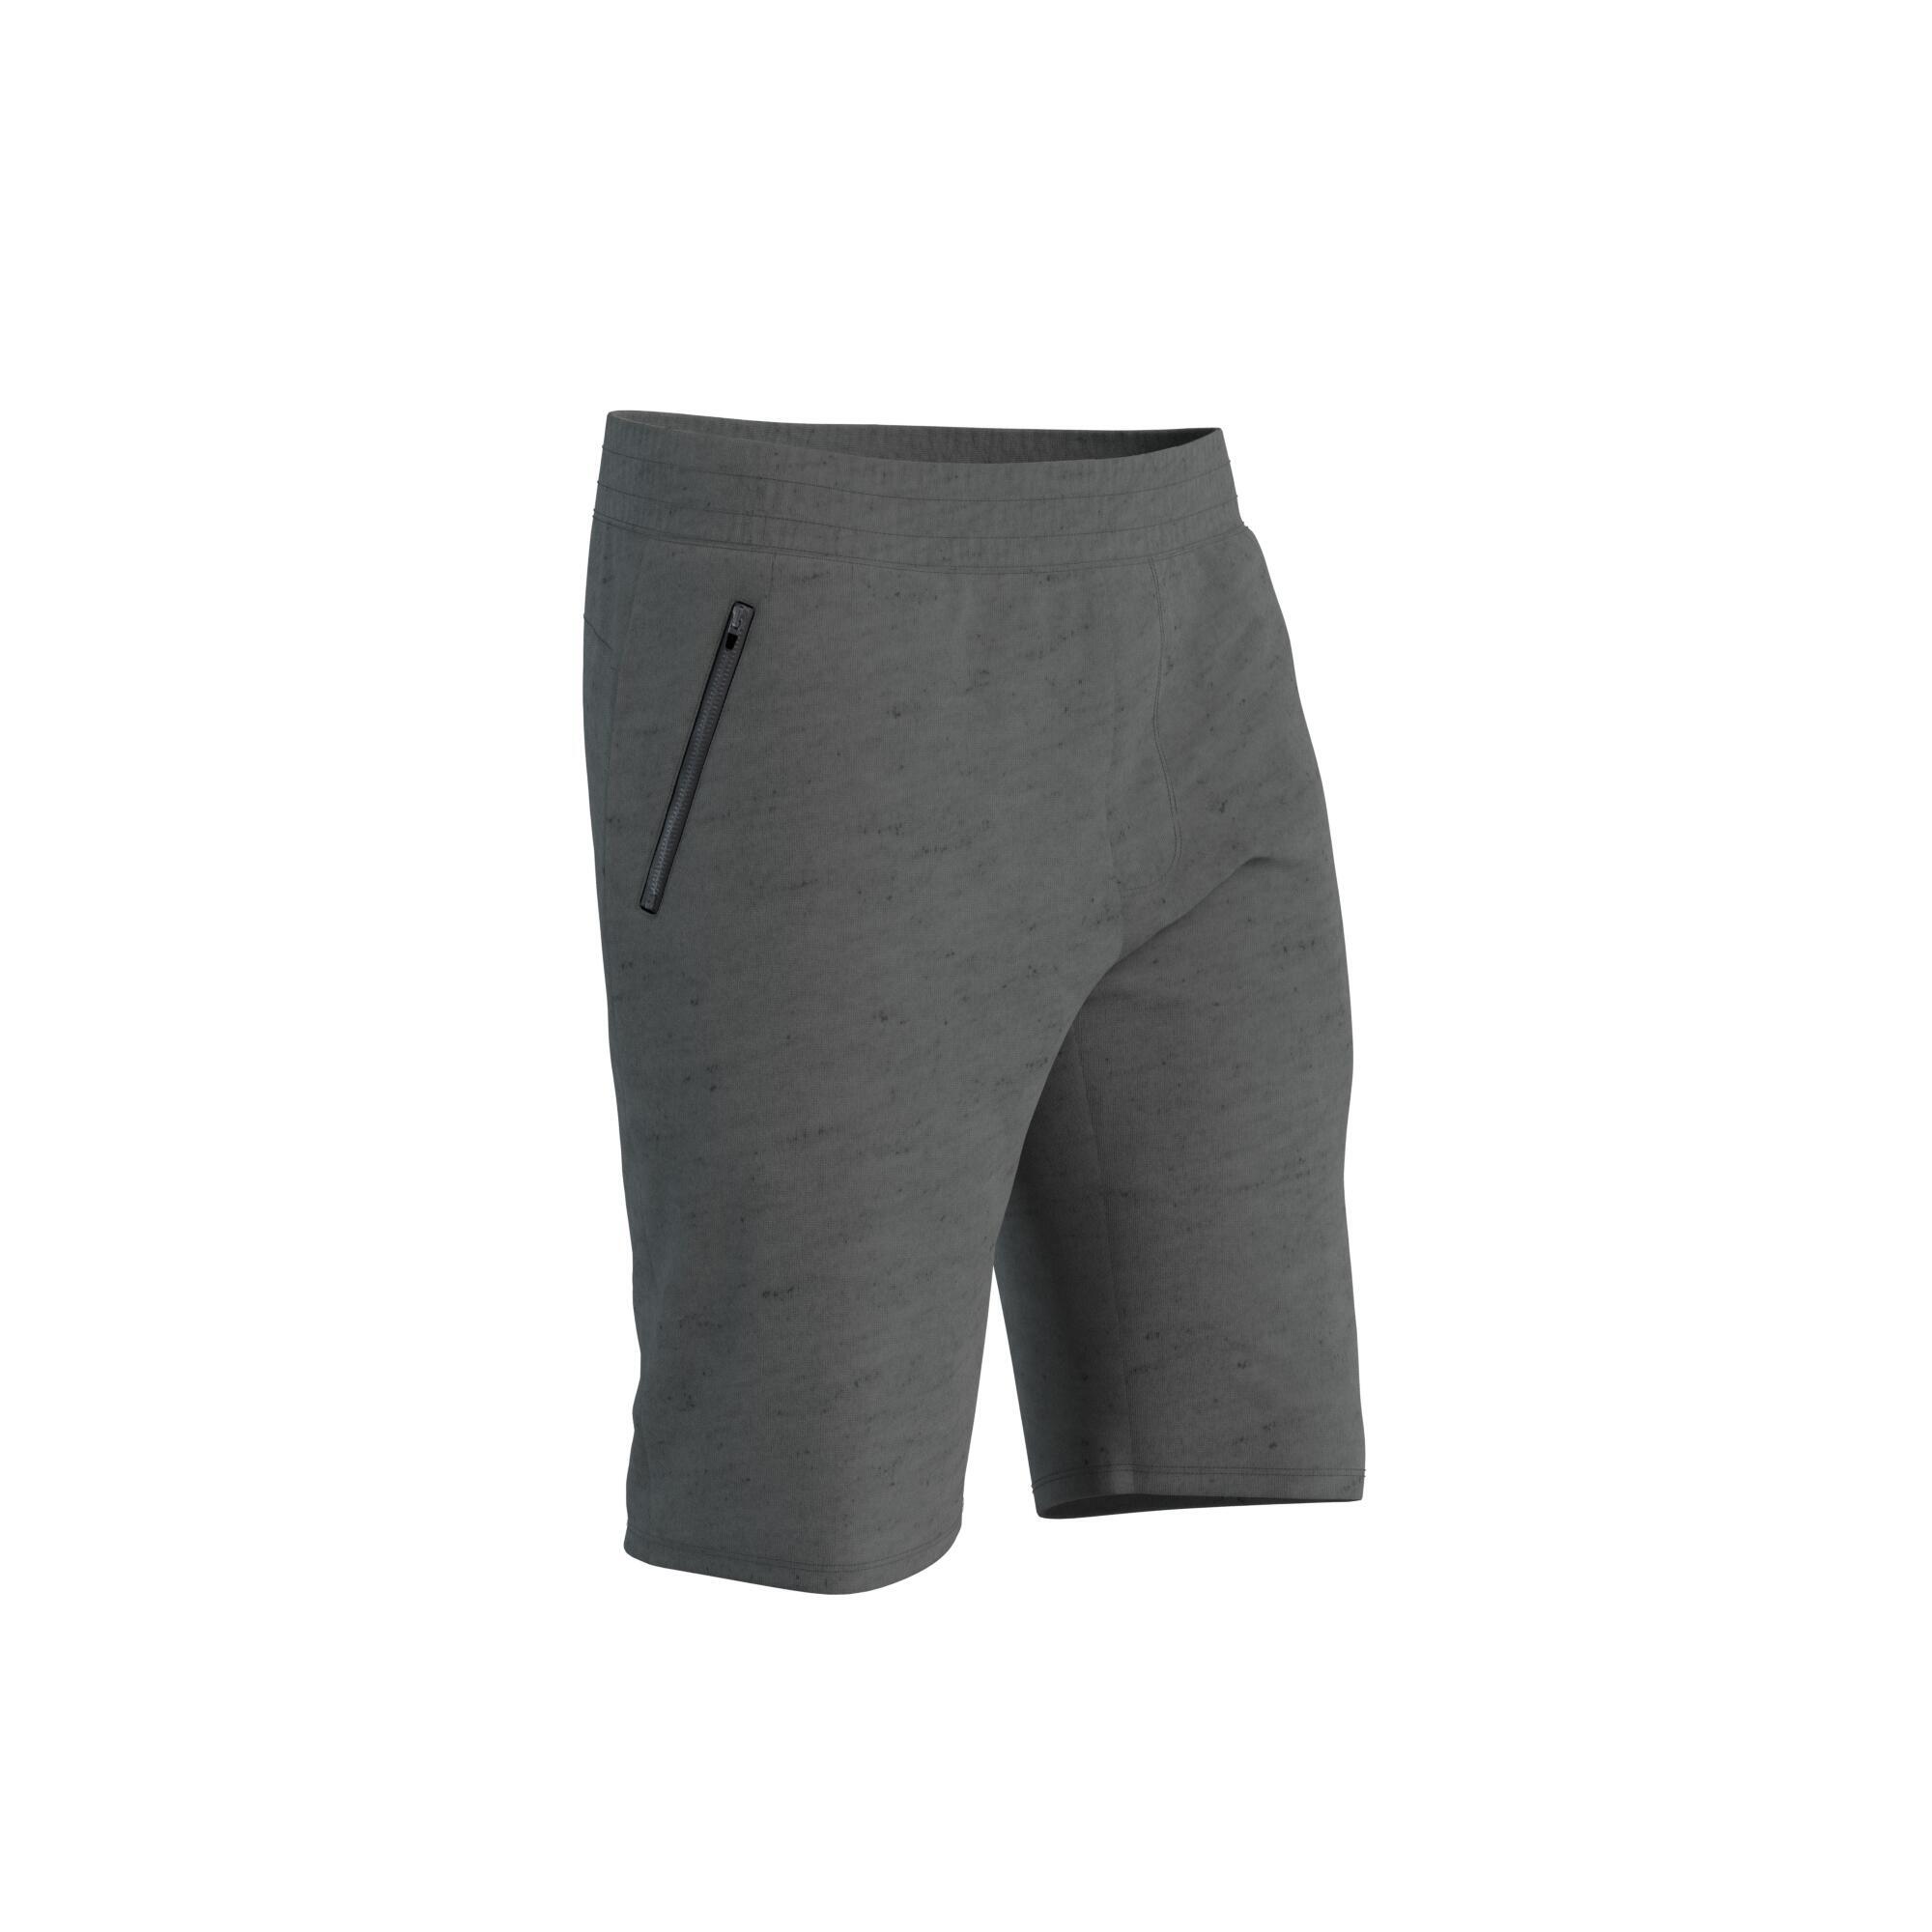 DOMYOS Men's Fitness Shorts 500 - Grey